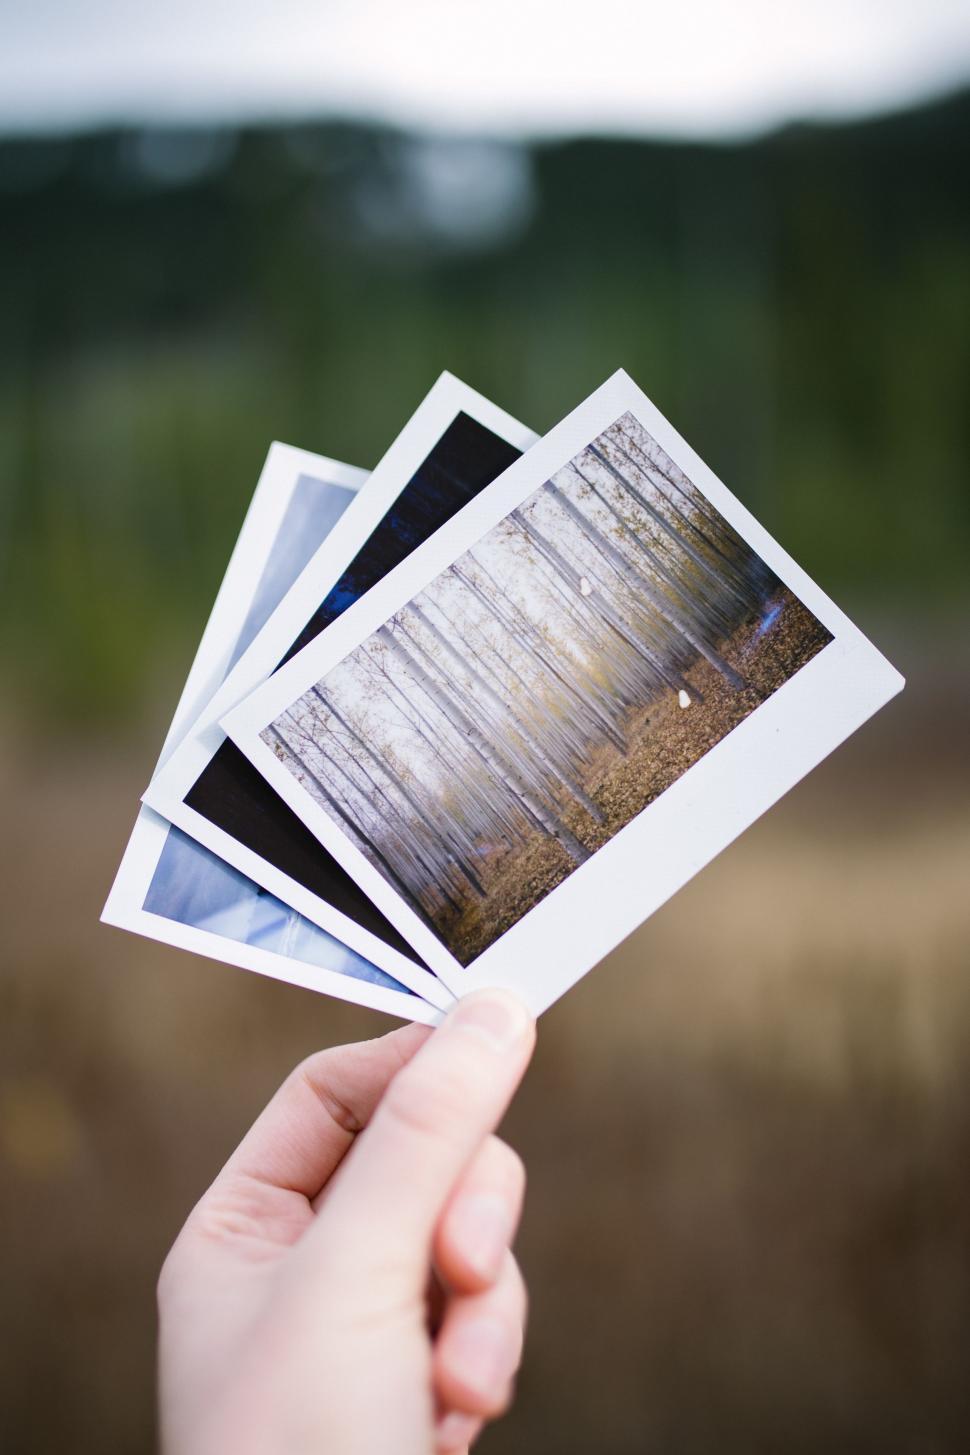 Free Image of Person Holding Up Four Polaroid Photos 